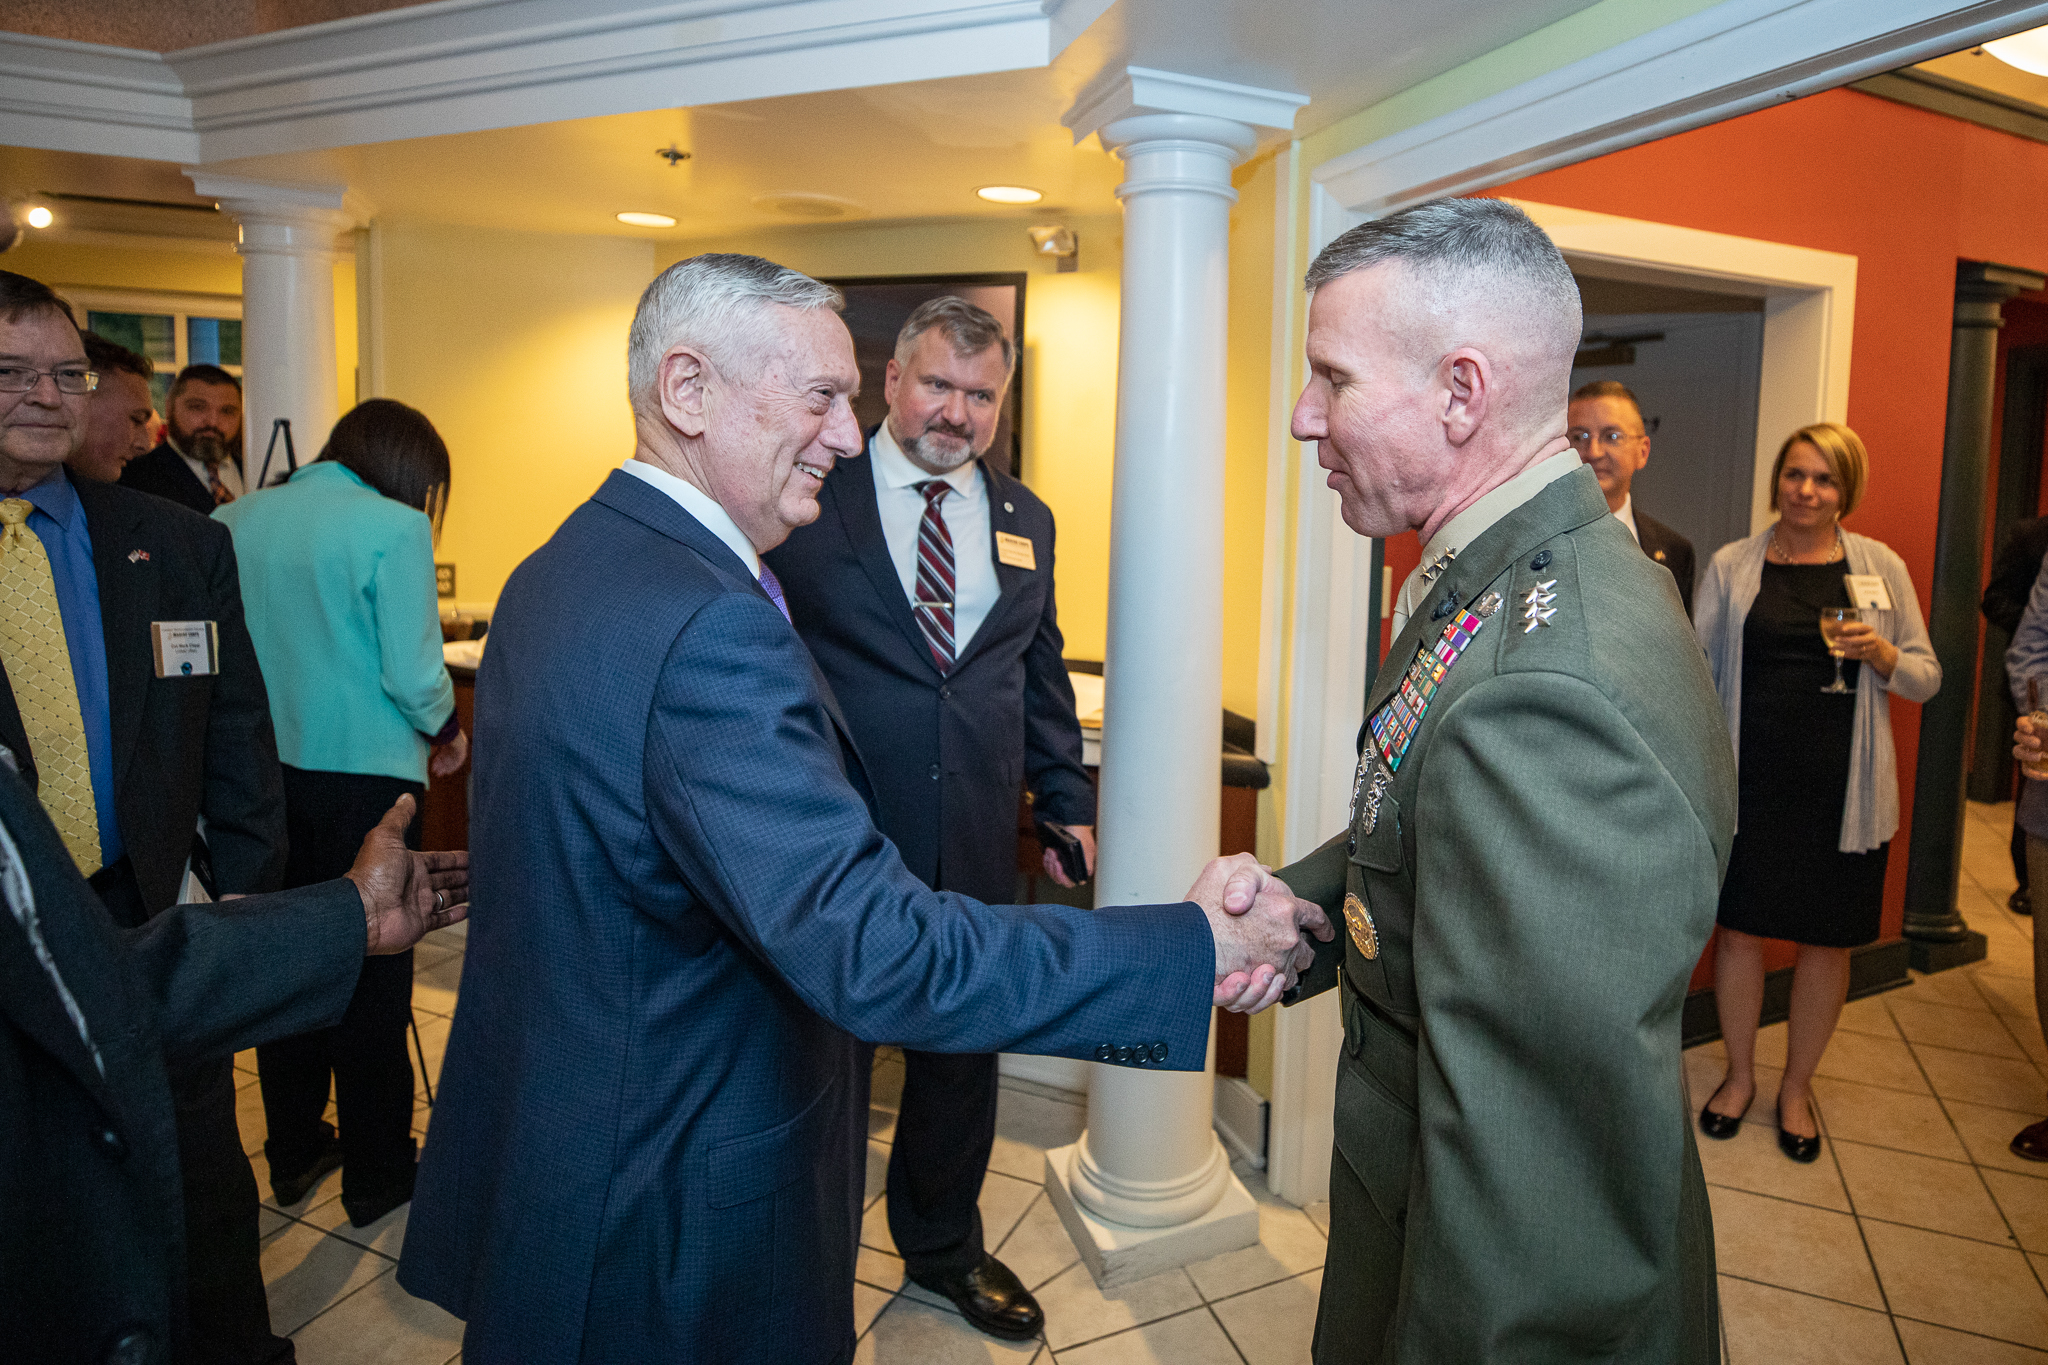 General Mattis shaking hands with generals at dinner